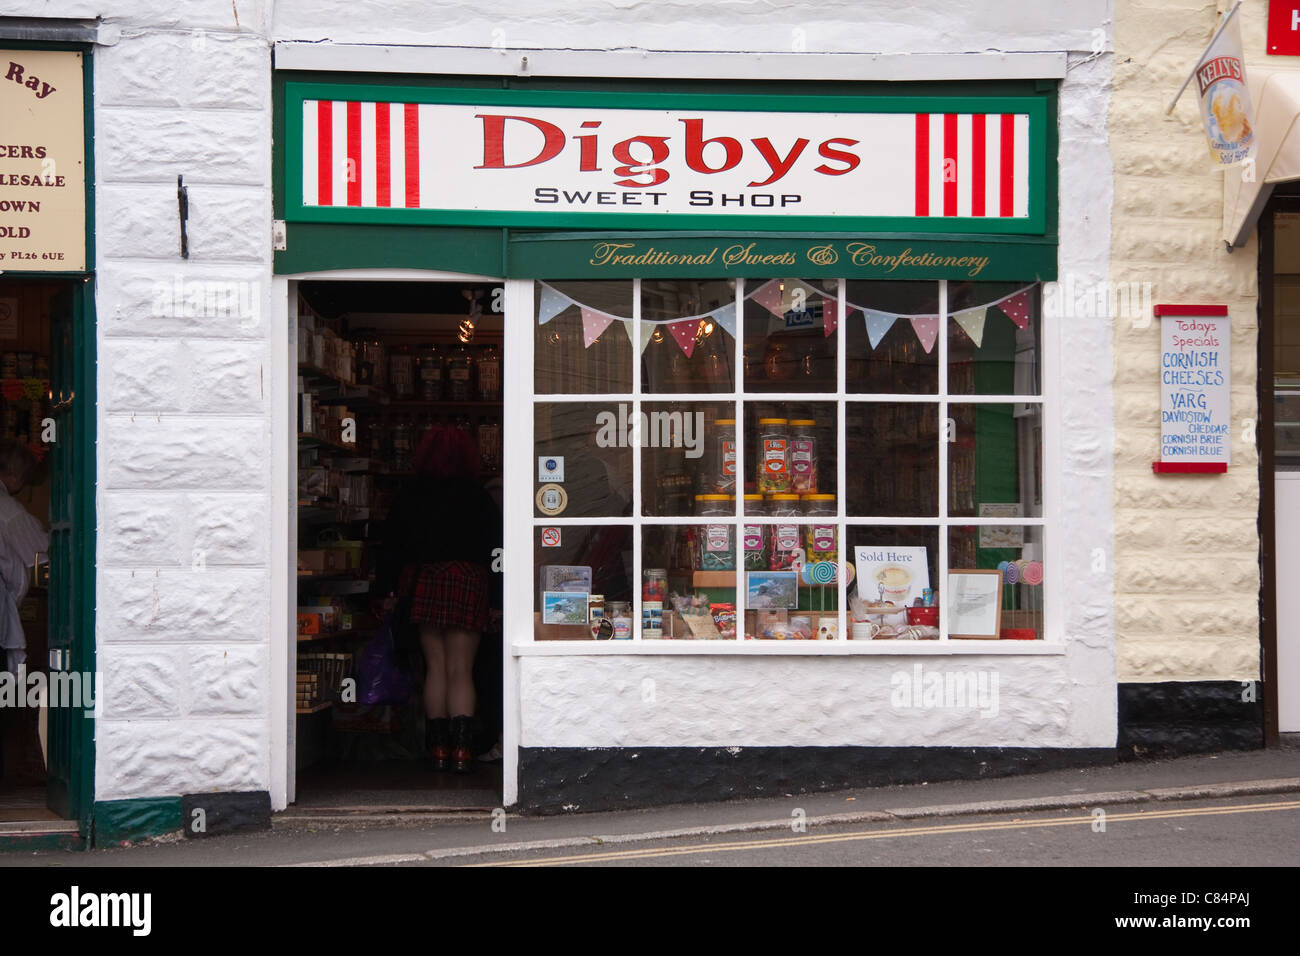 Digbys Seet Shop, Mevagissey, Cornwall Stockfoto